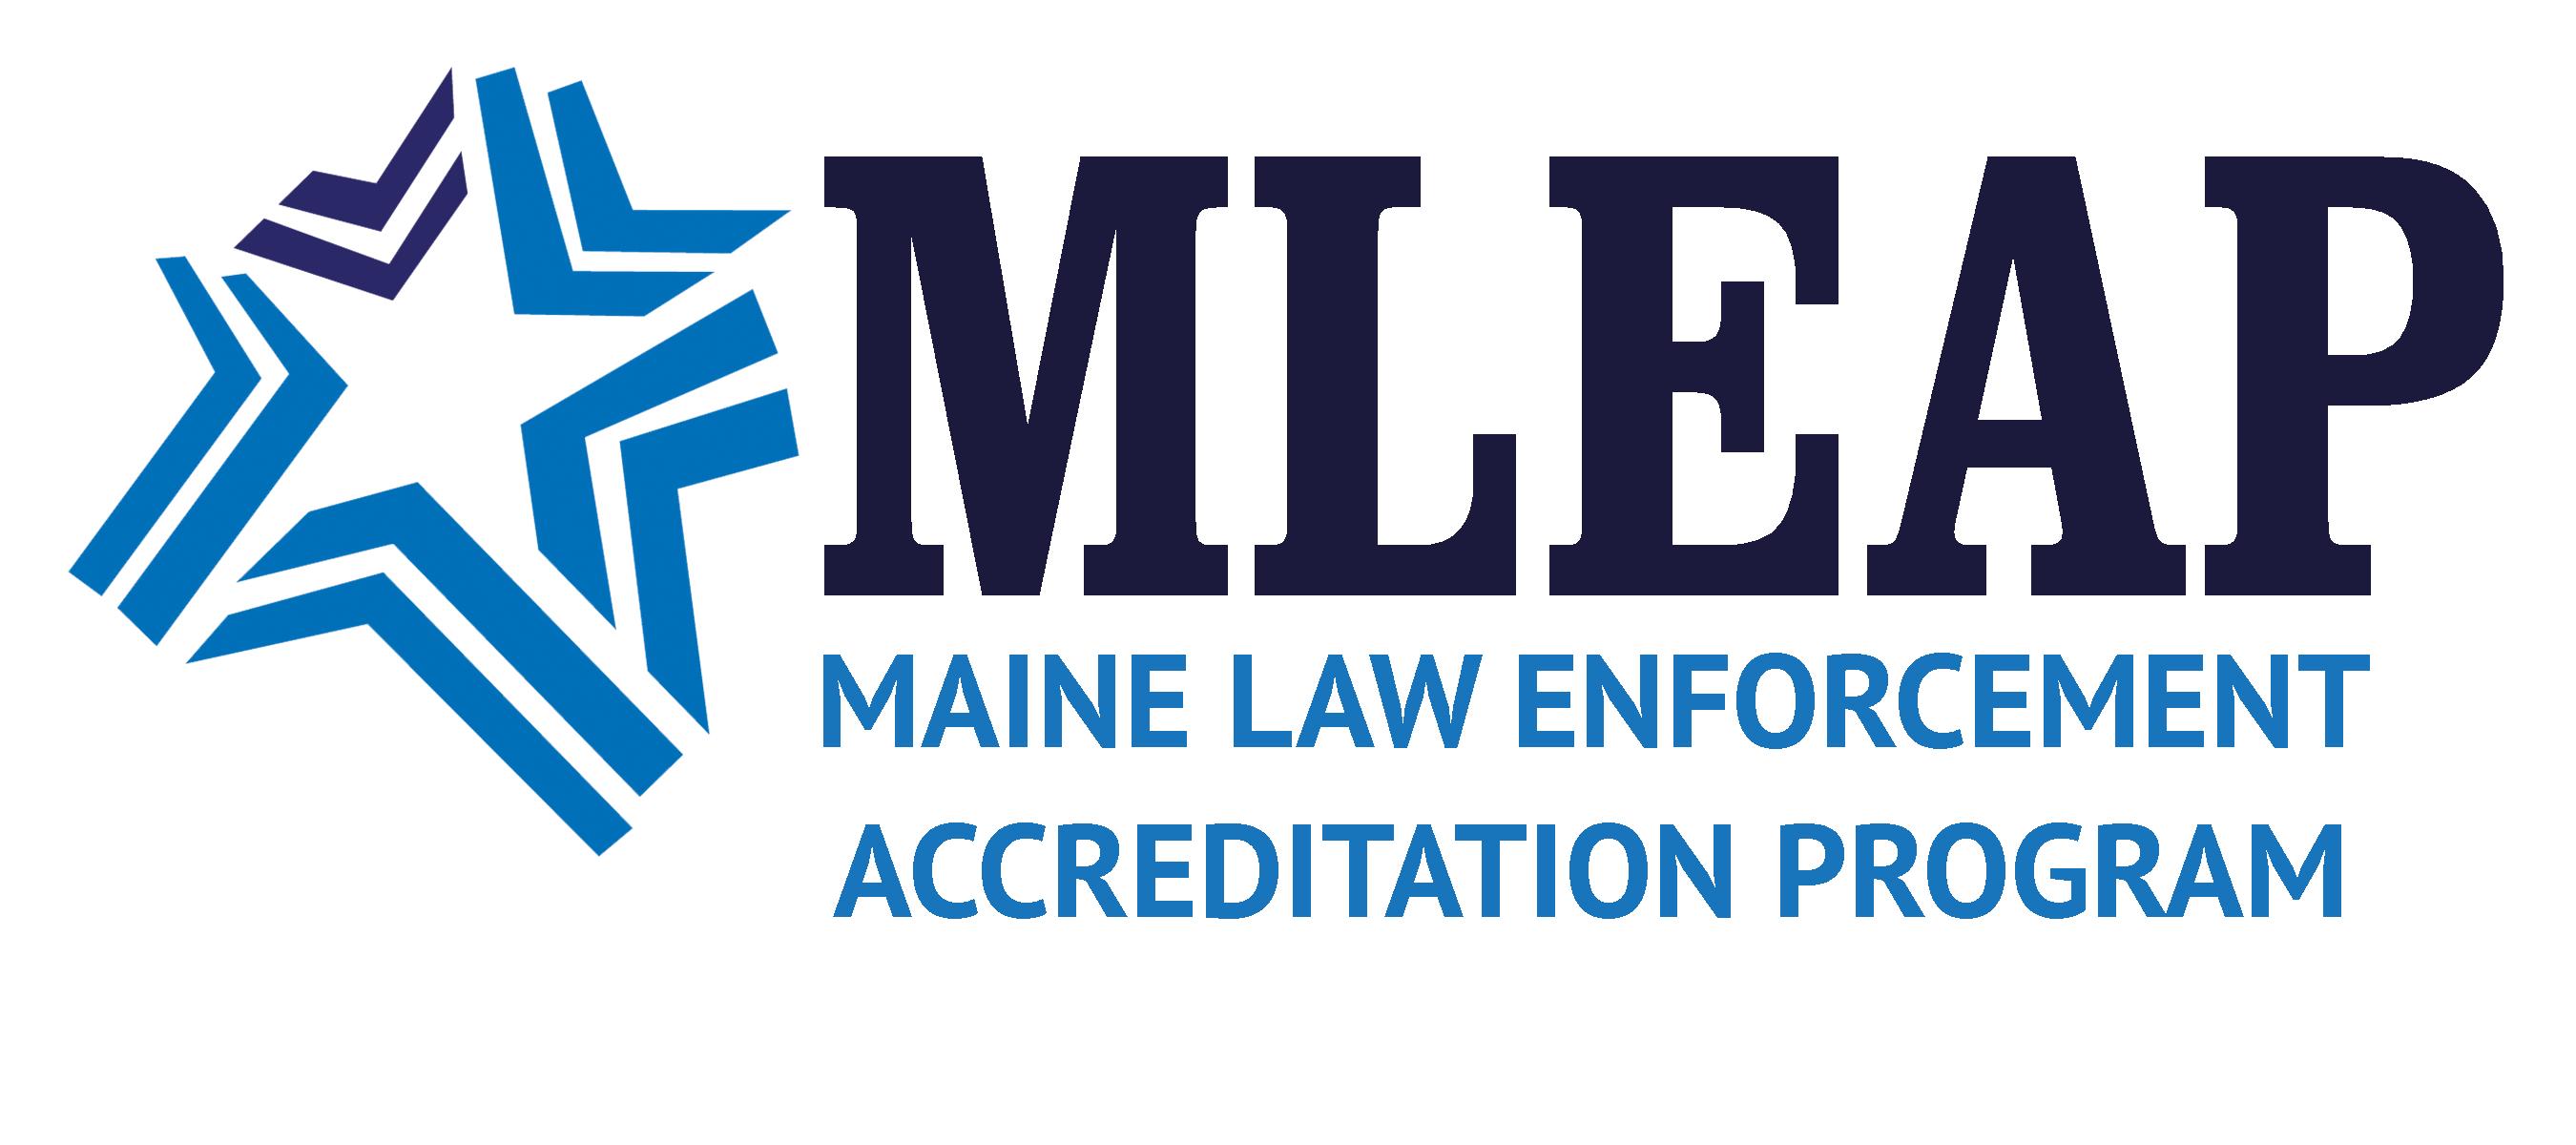 Maine Law Enforcement Accreditation Program (MLEAP) logo